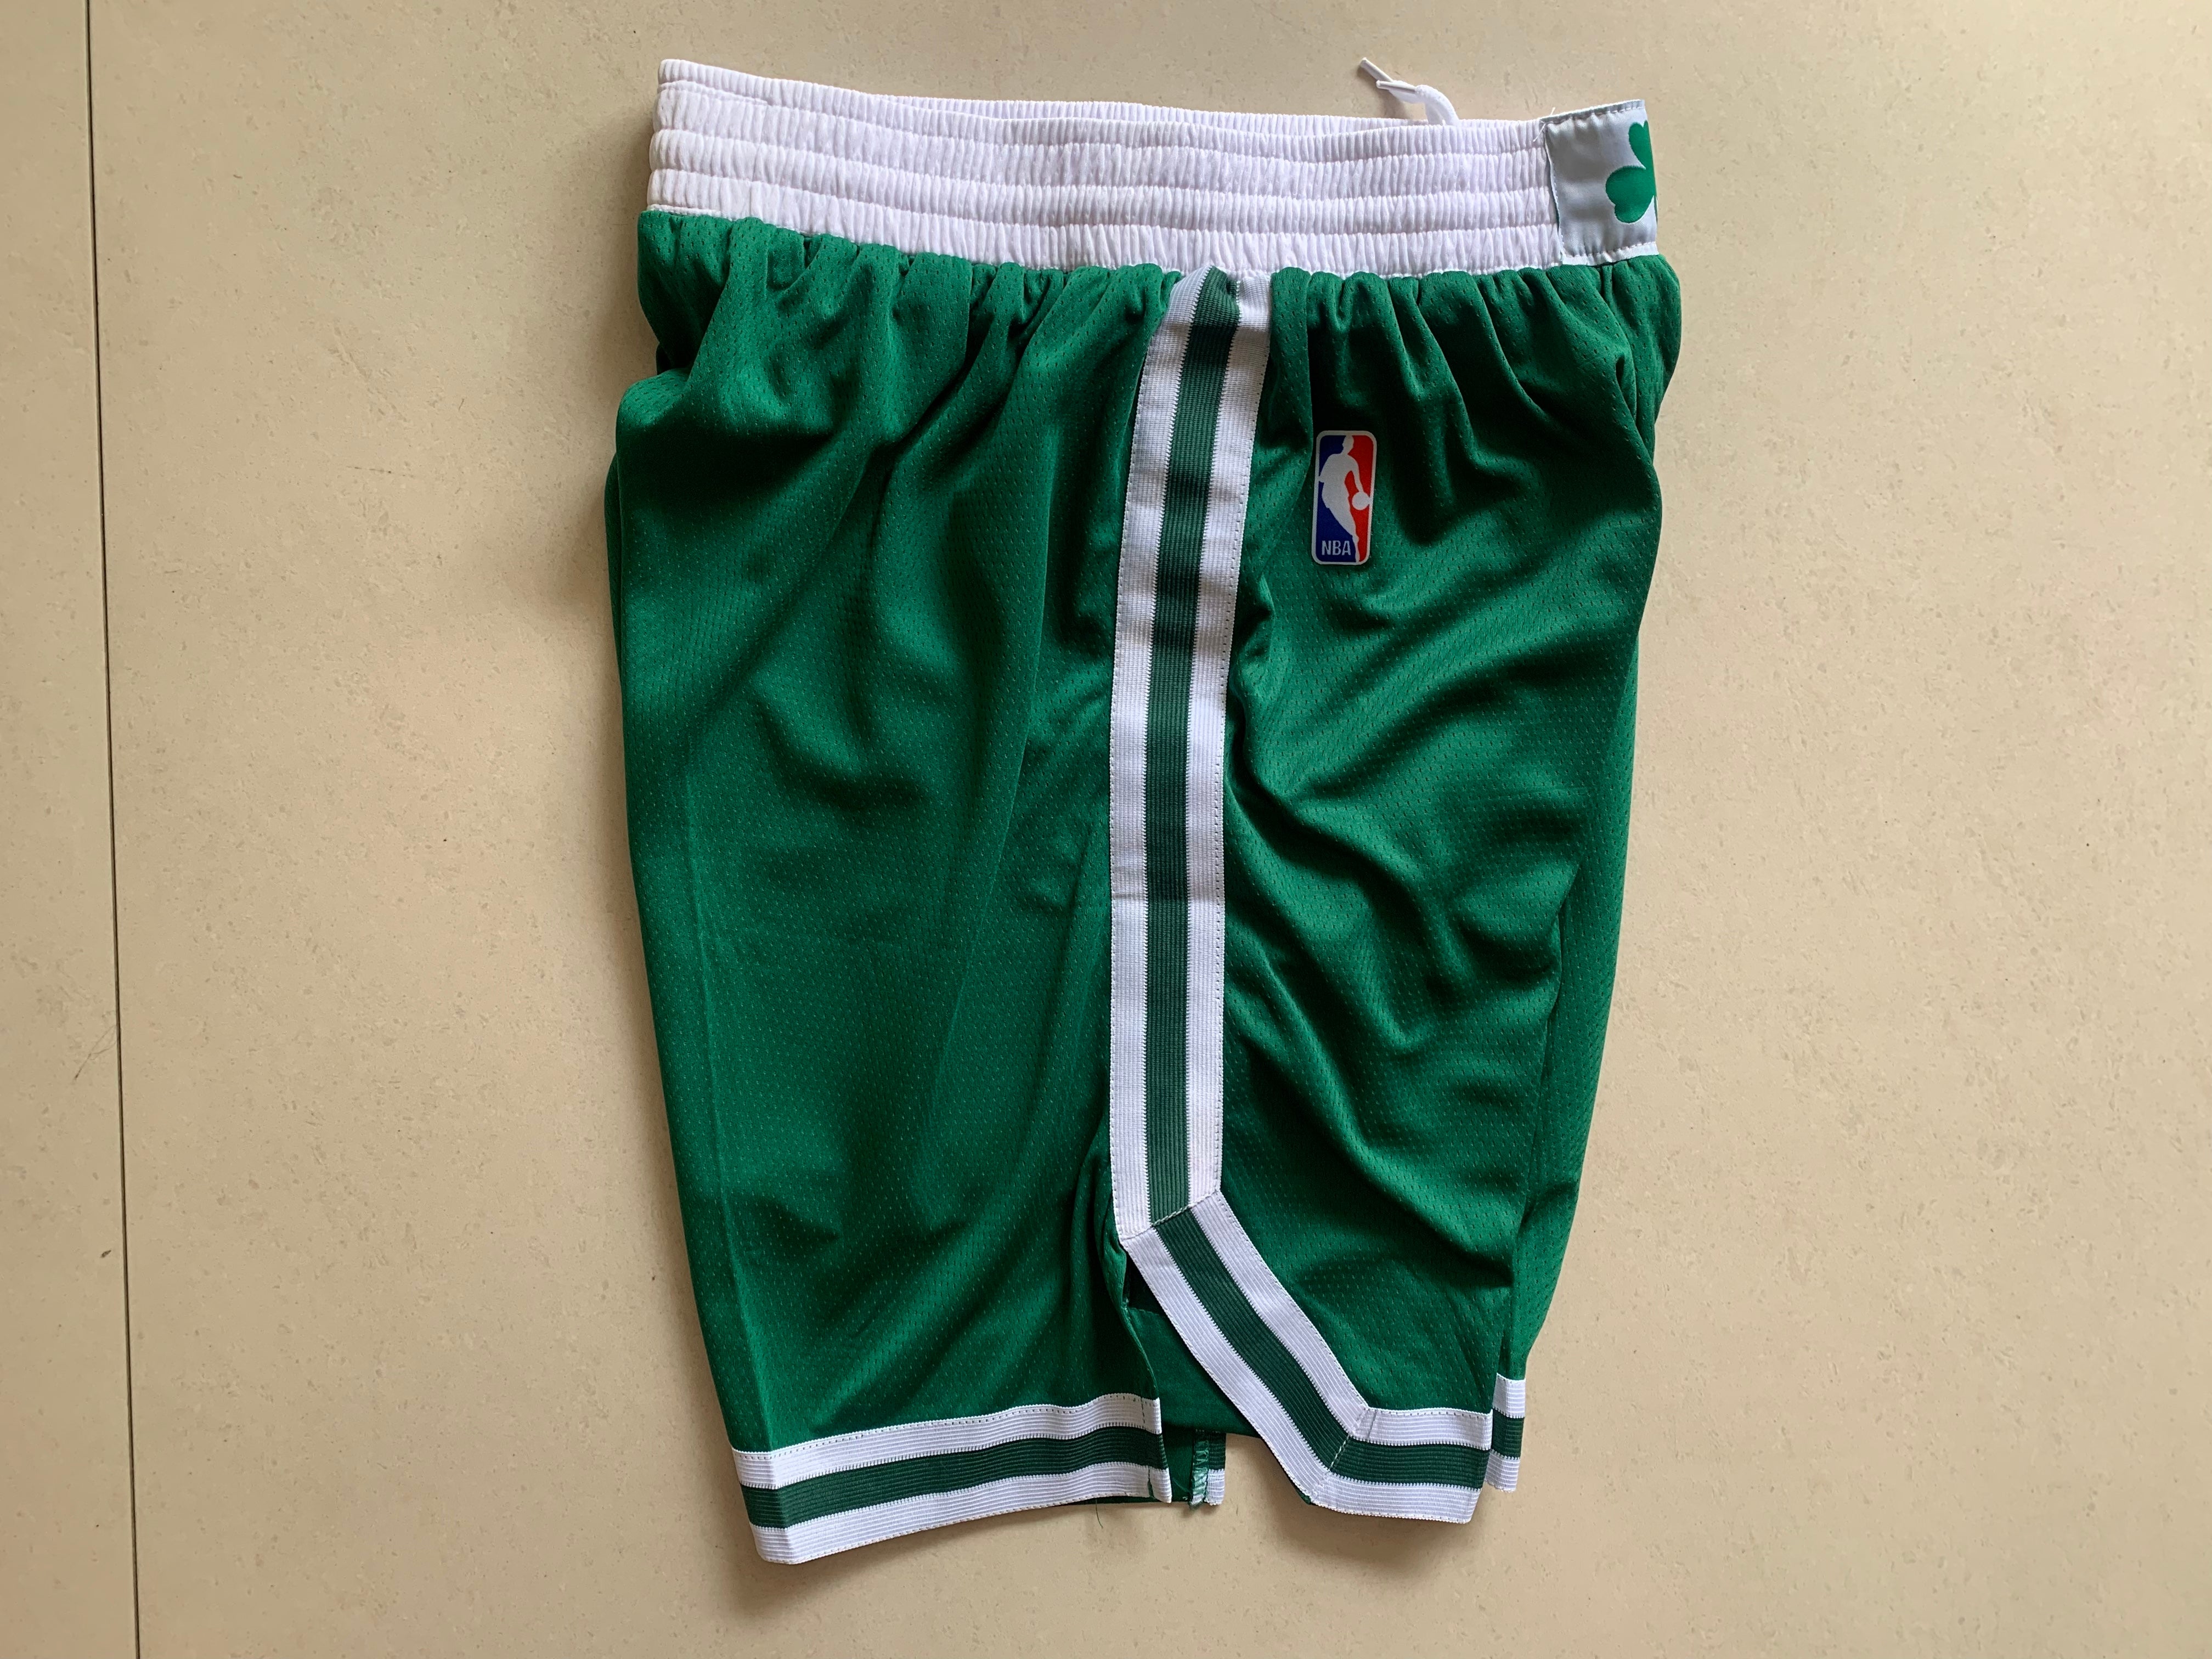 Celtics green Shorts